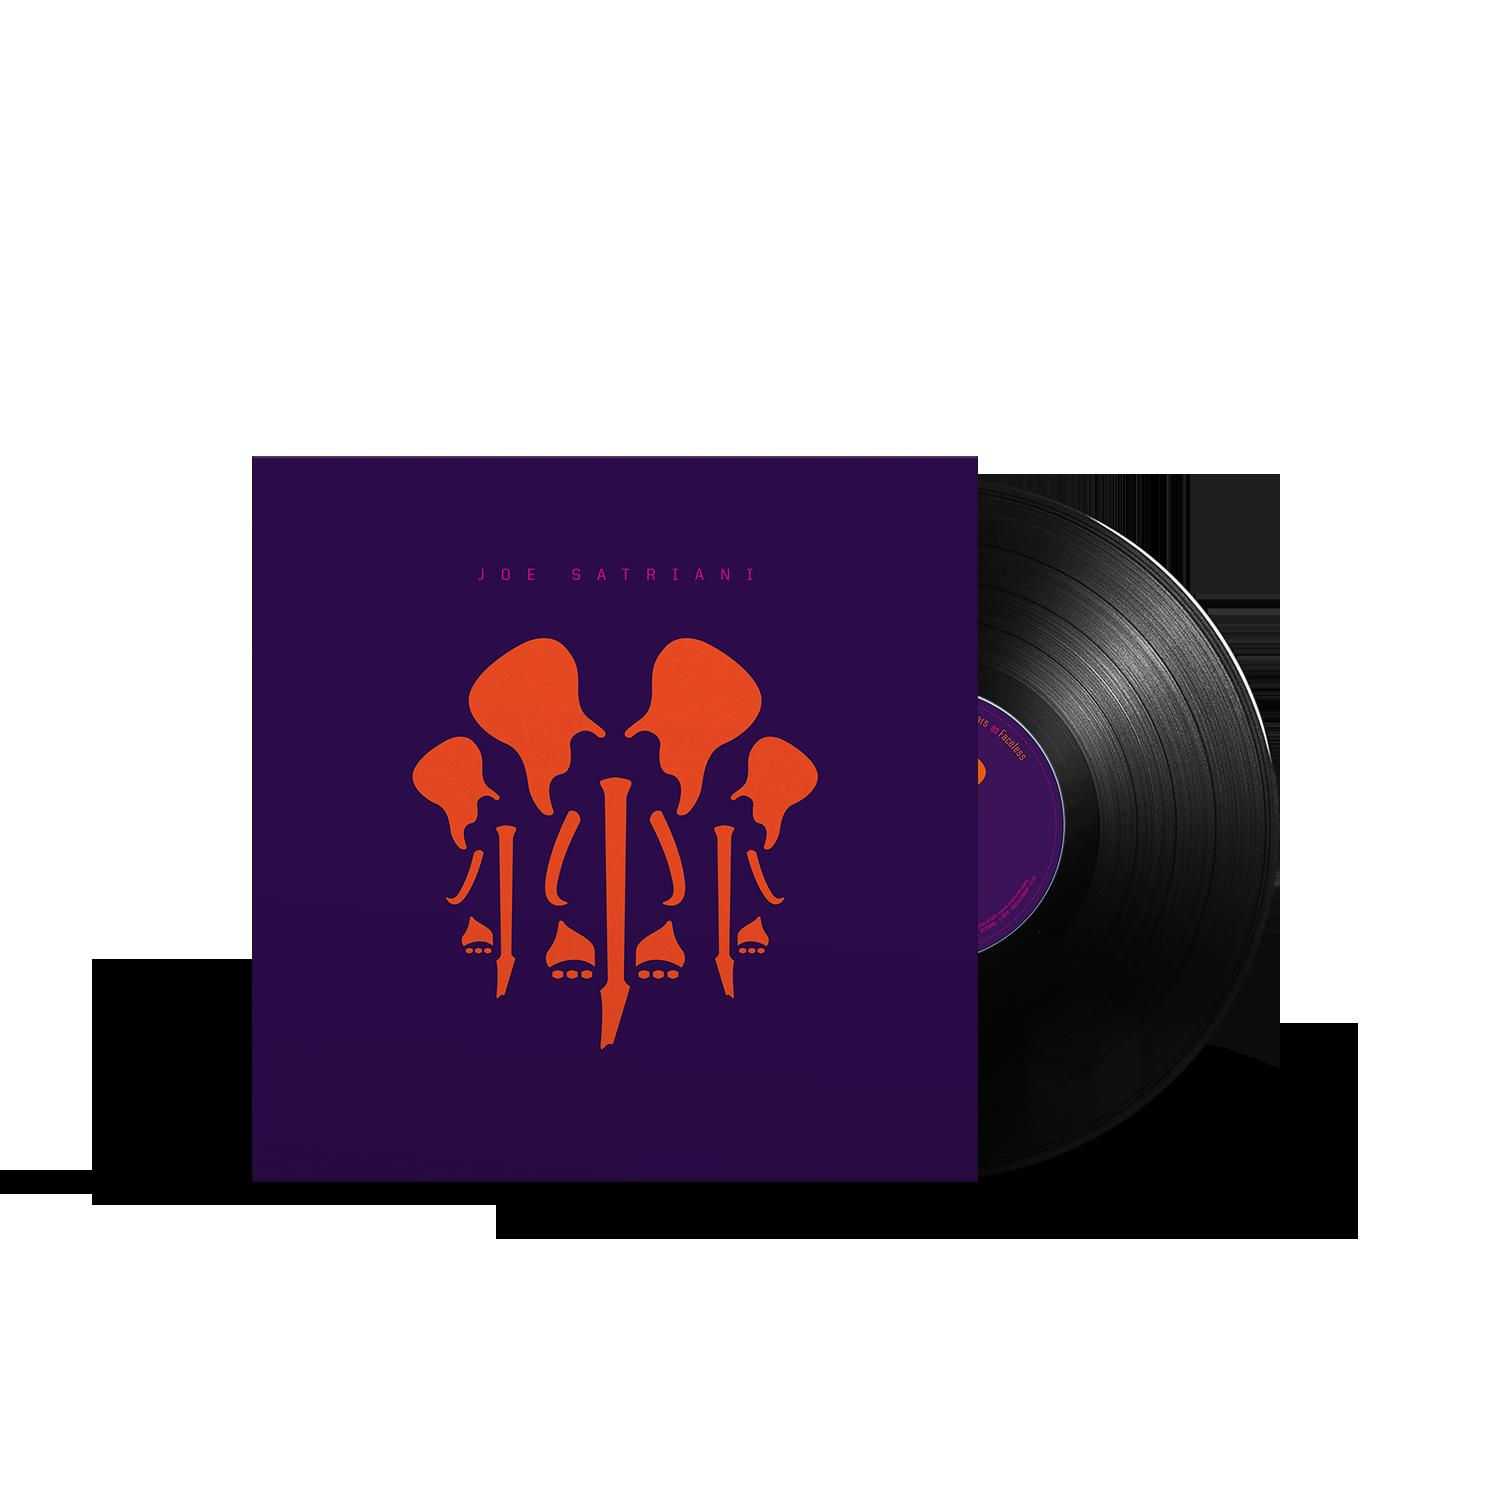 Joe Satriani - The Elephants (Vinyl) Mars - of